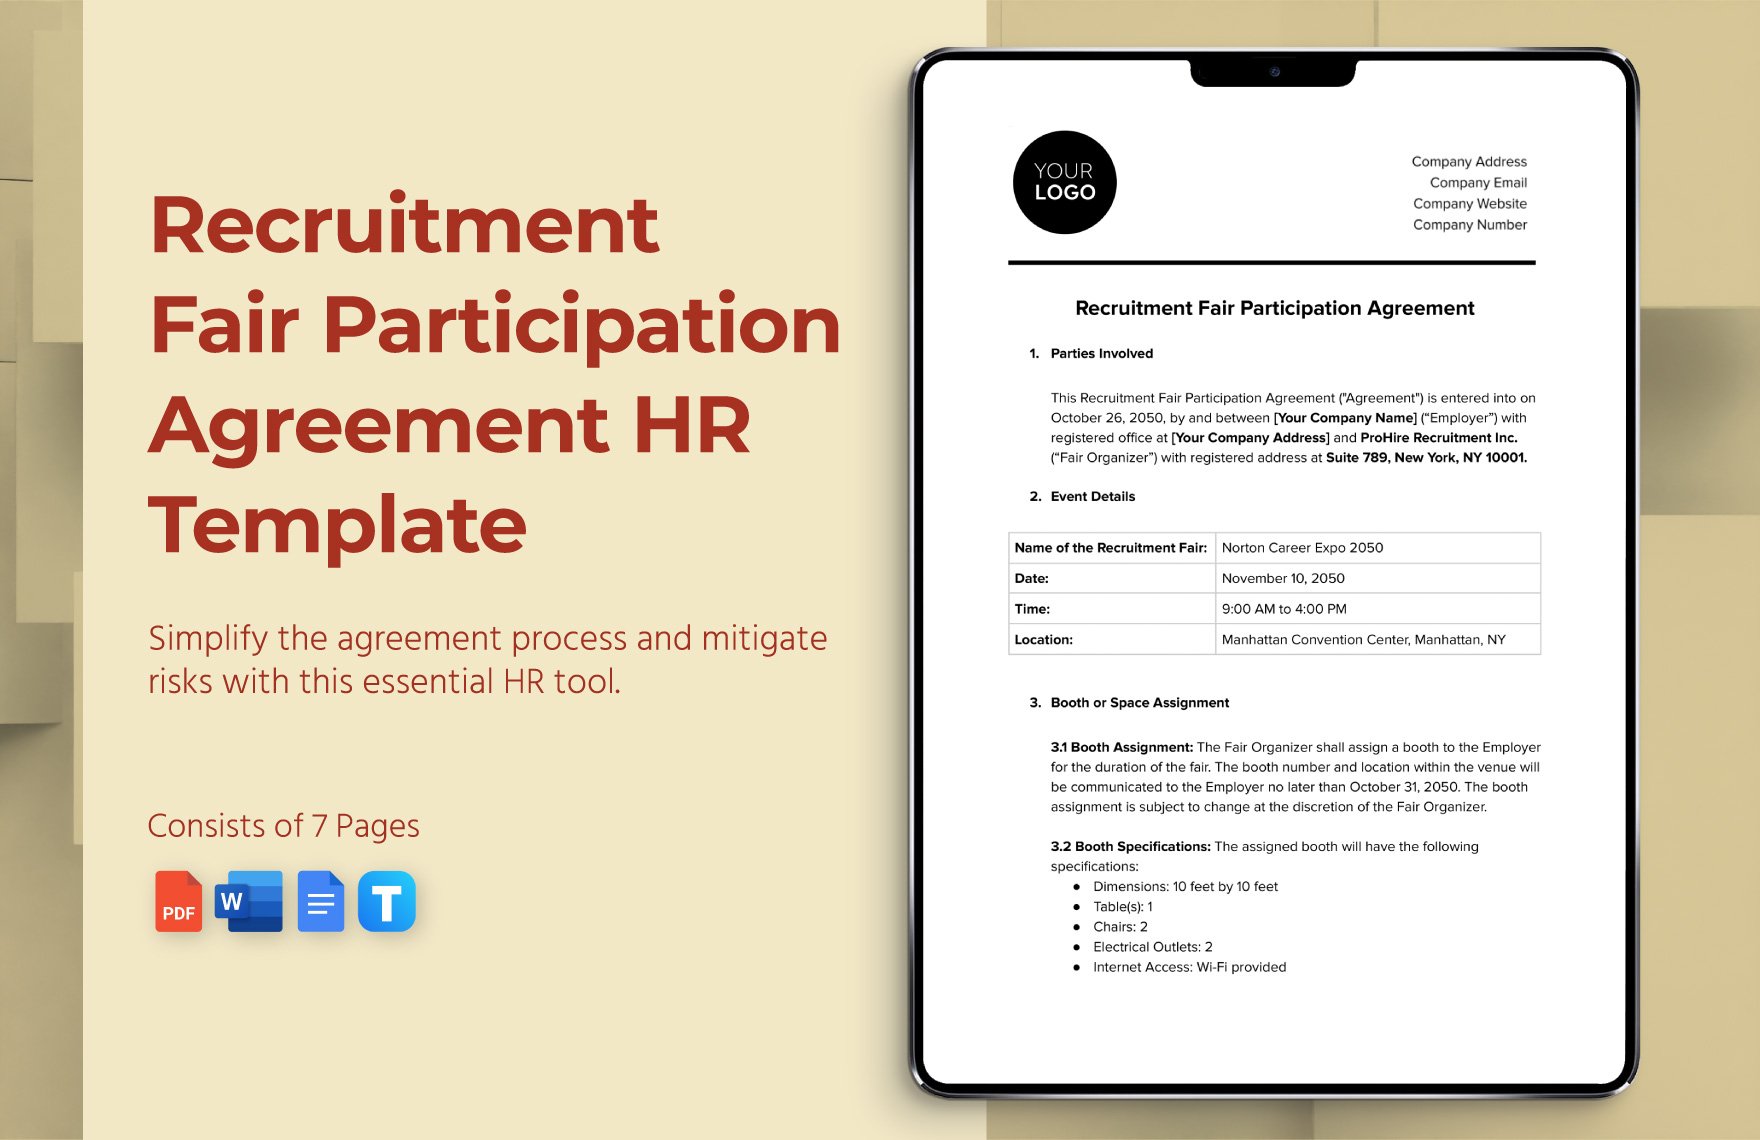 Recruitment Fair Participation Agreement HR Template in Word, Google Docs, PDF